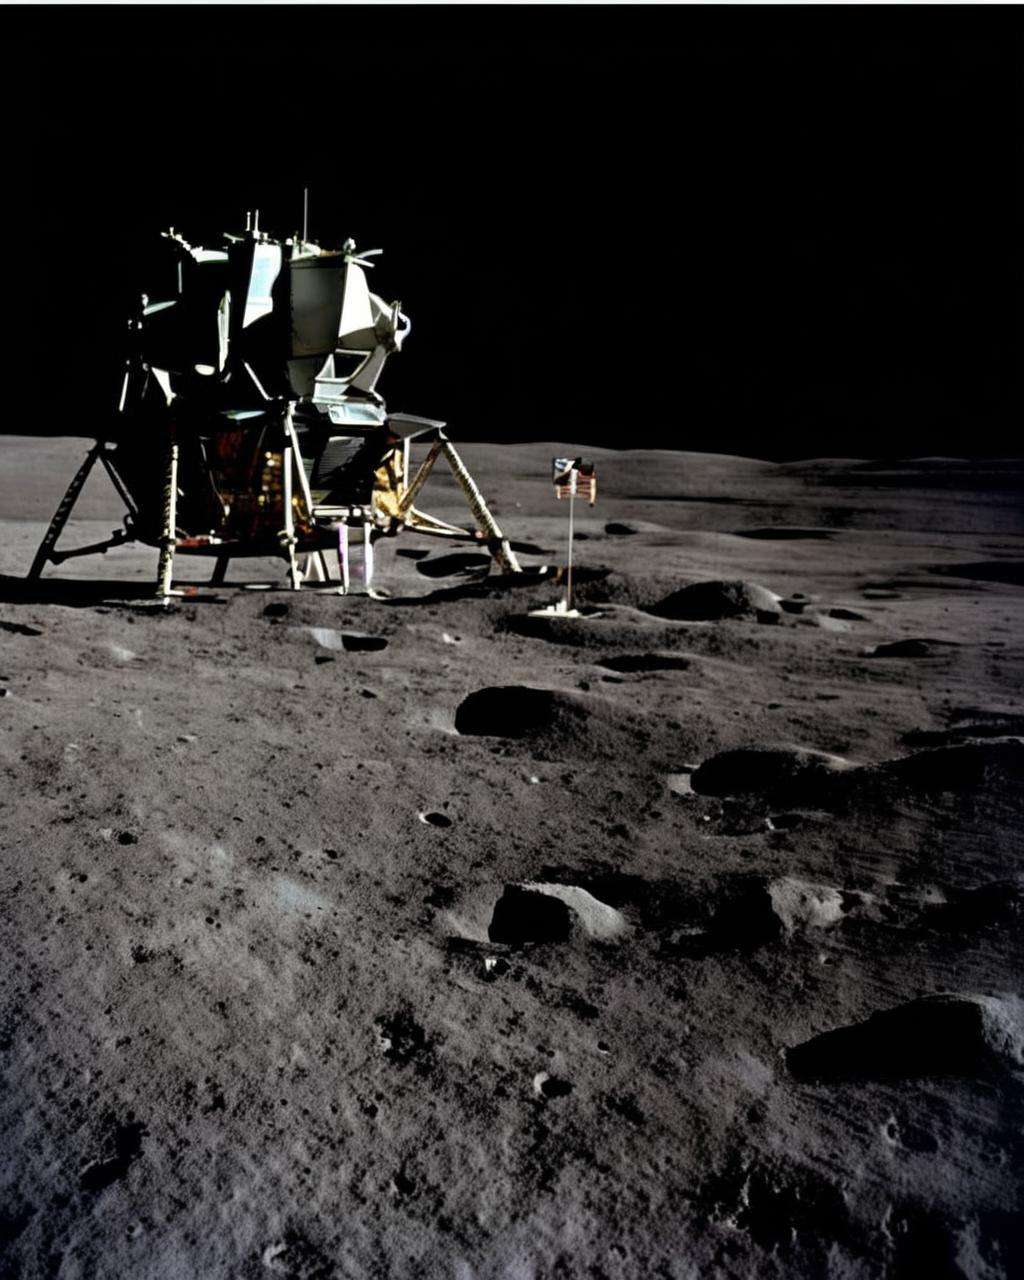 mission apollo on the moon, deep black sky <lora:Apollo_Style:1.0>